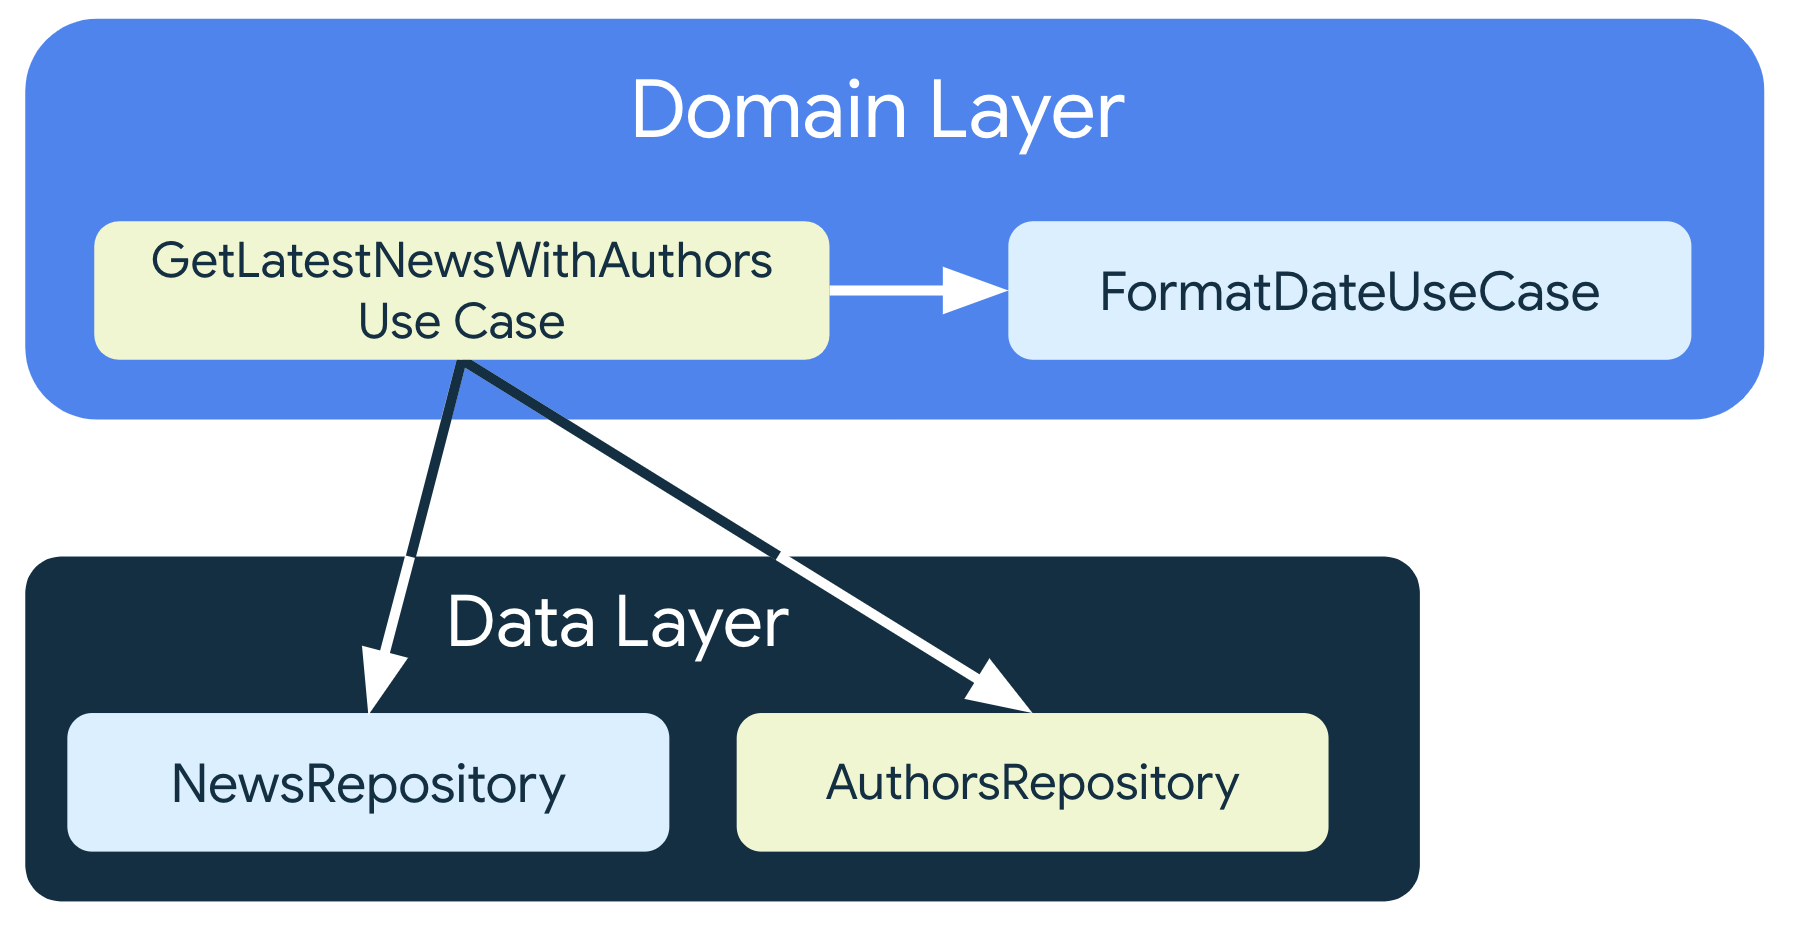 GetLatestNewsWithAuthorsUseCase bergantung pada class repositori dari
    lapisan data, tetapi juga bergantung pada FormatDataUseCase yang merupakan class kasus penggunaan
    lain yang juga berada di lapisan domain.